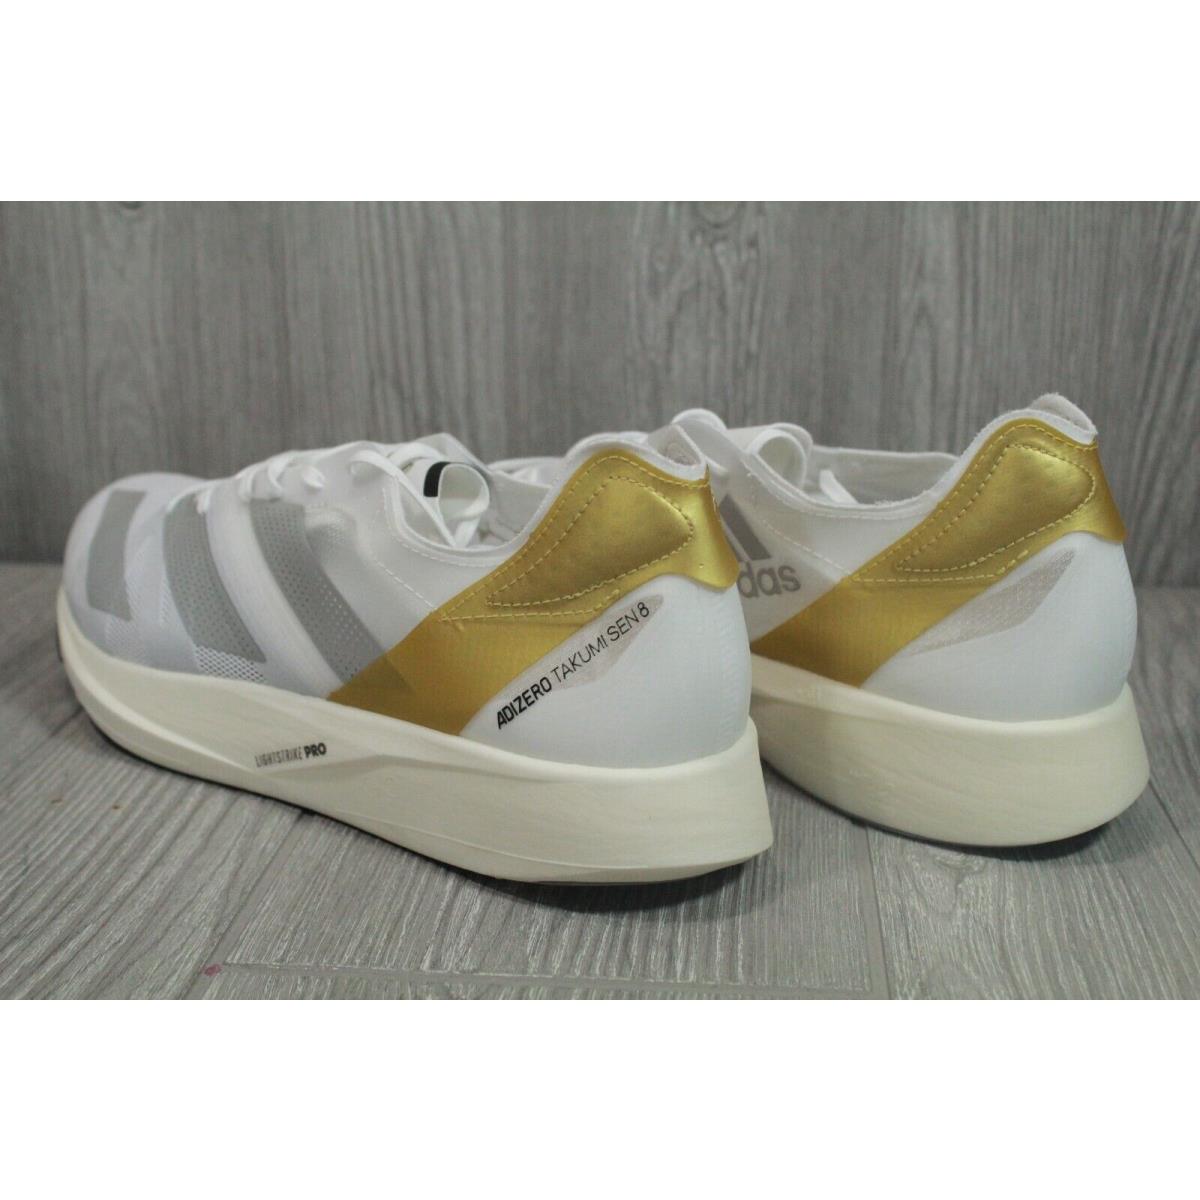 Adidas shoes  - White 3